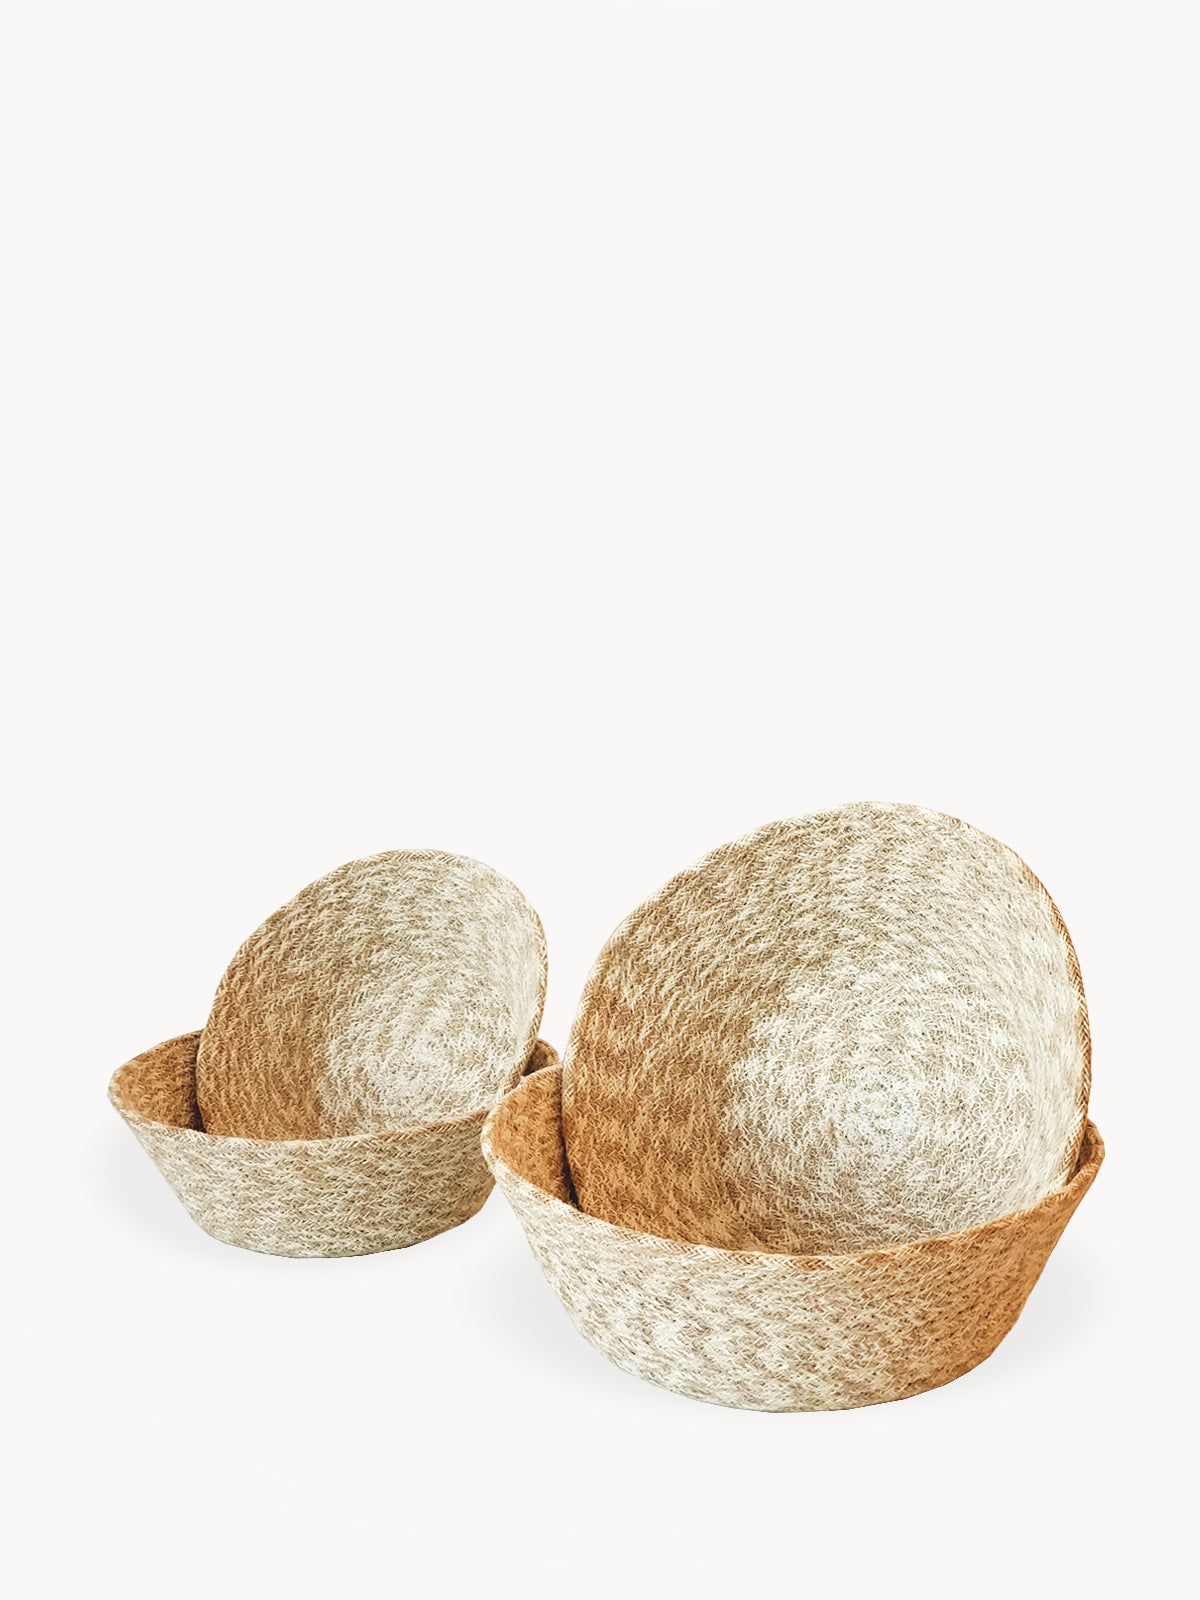 Buy Agora Woven Nesting Bowl (Set of 4) by KORISSA by KORISSA